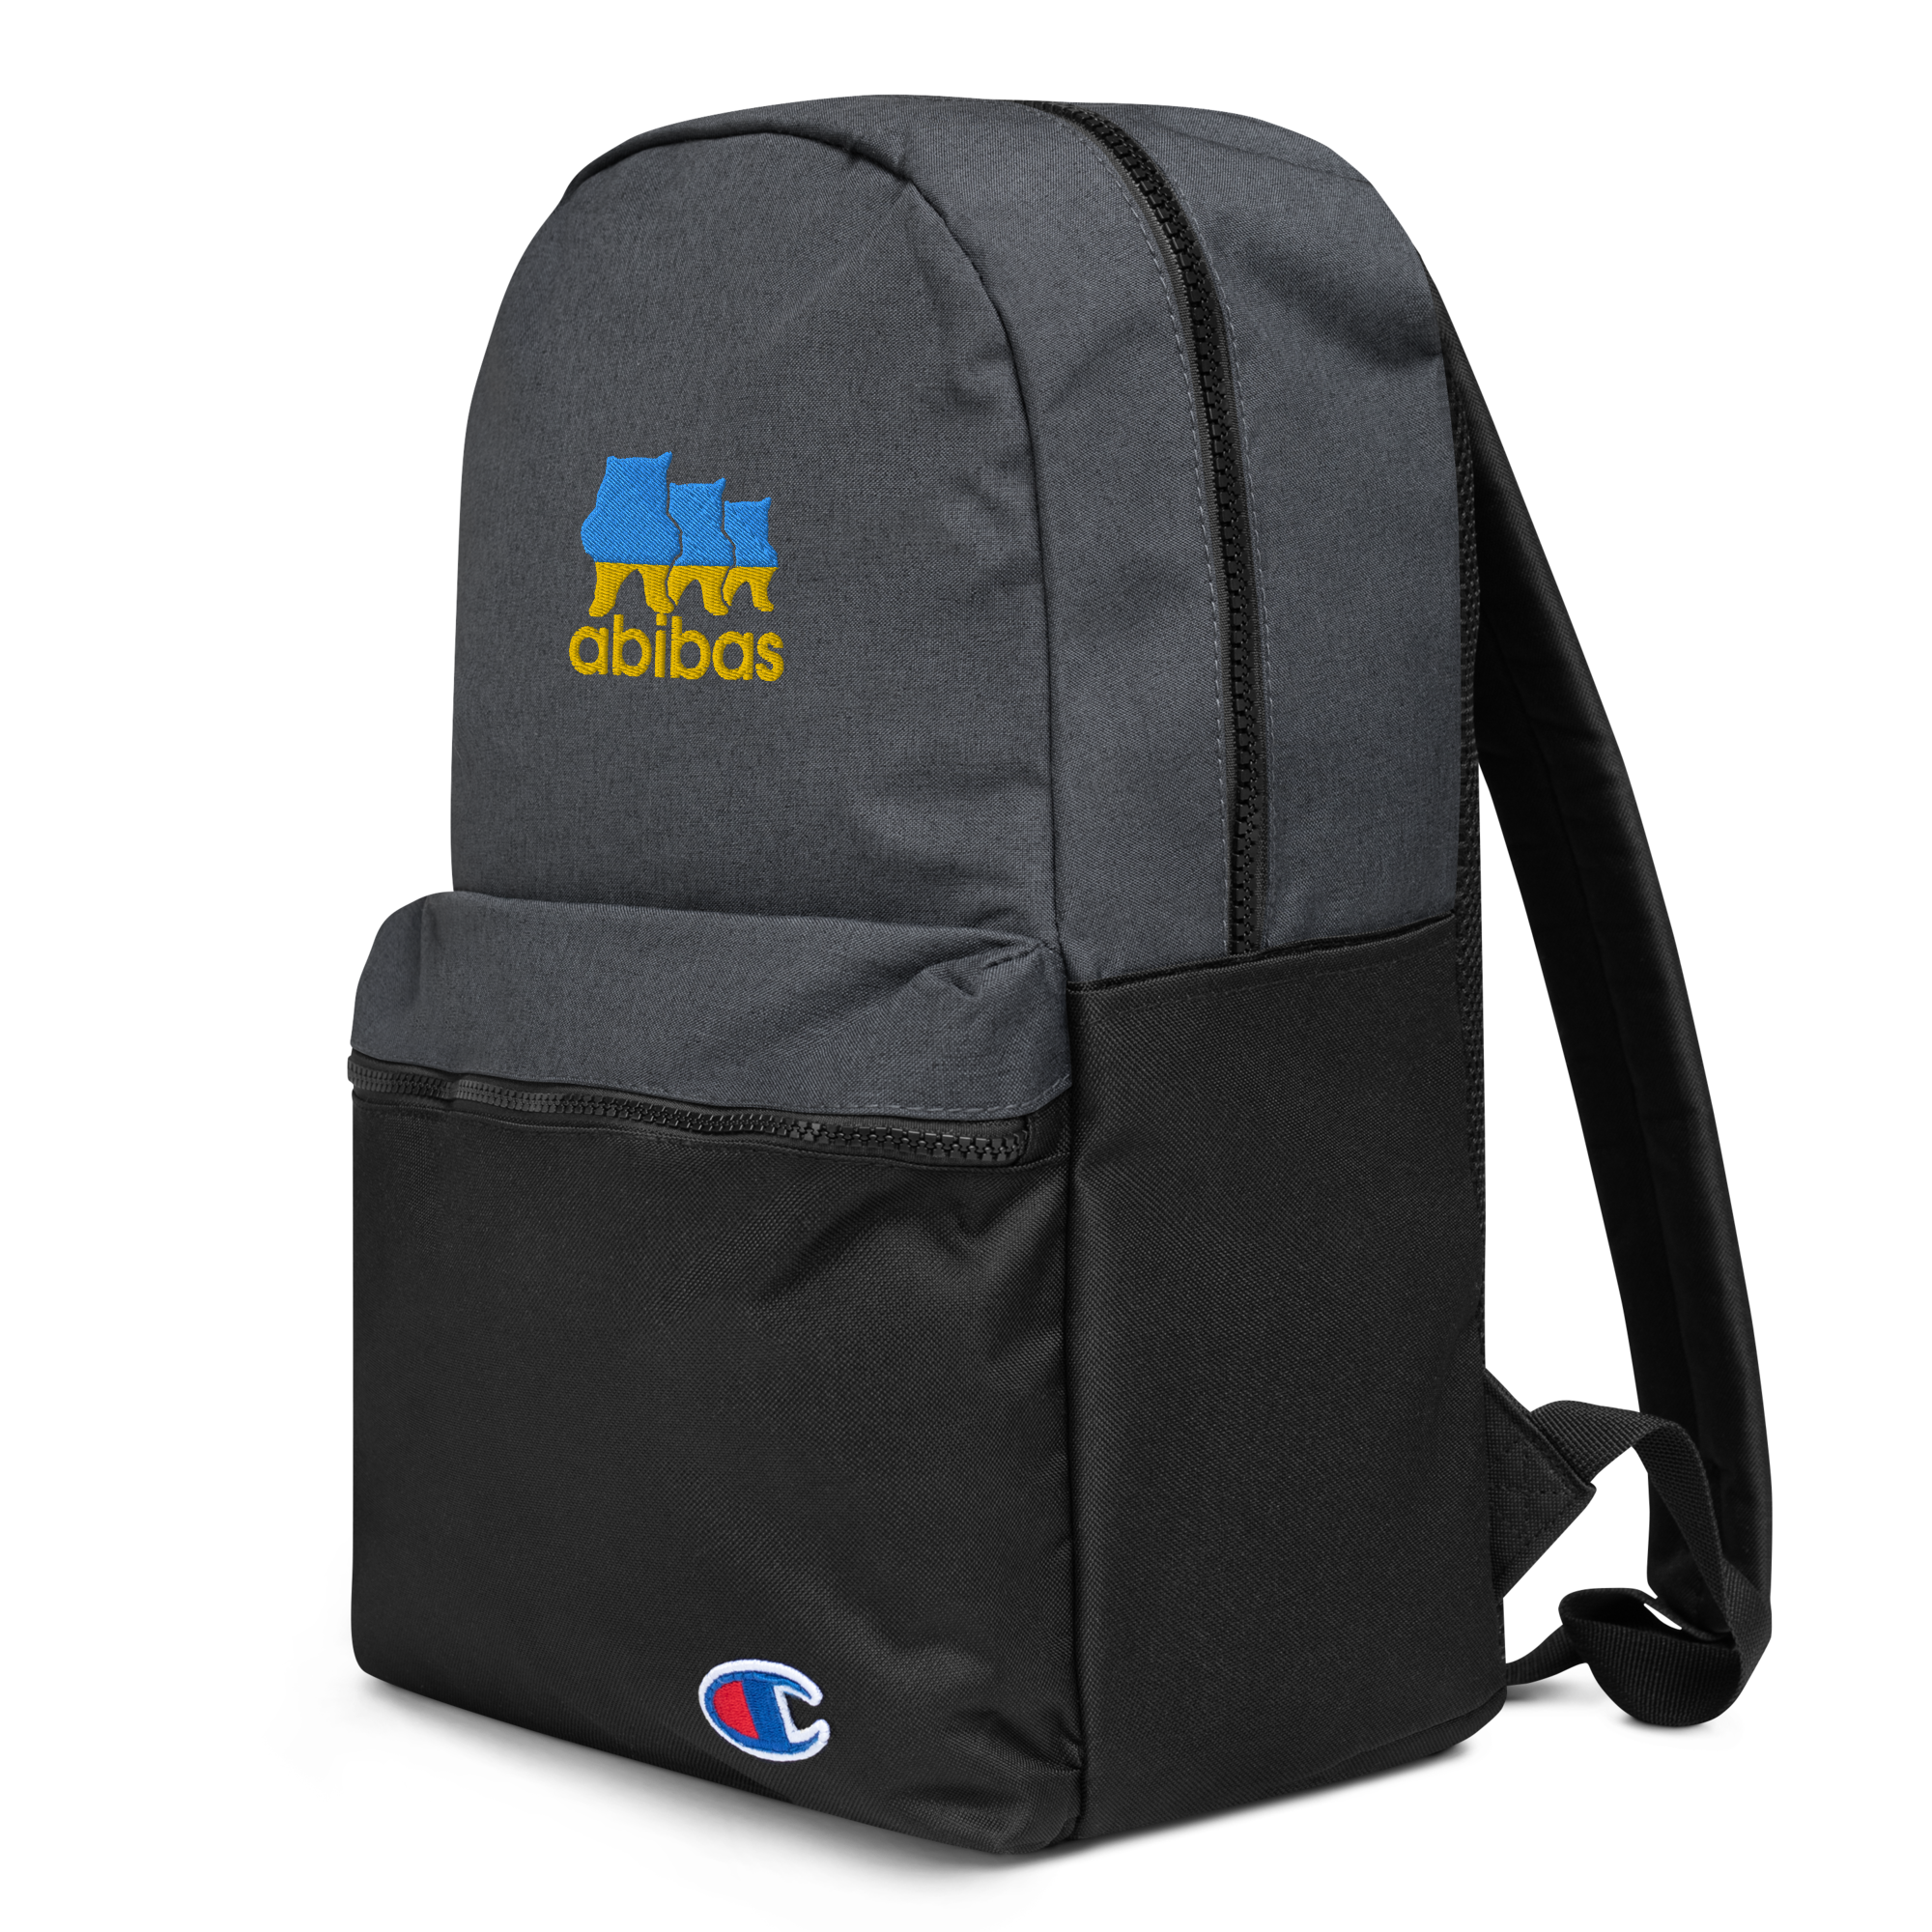 Abibas Small 15 L Backpack Bags Backpack Bag 15 L 15 L Laptop Backpack  Black - Price in India | Flipkart.com